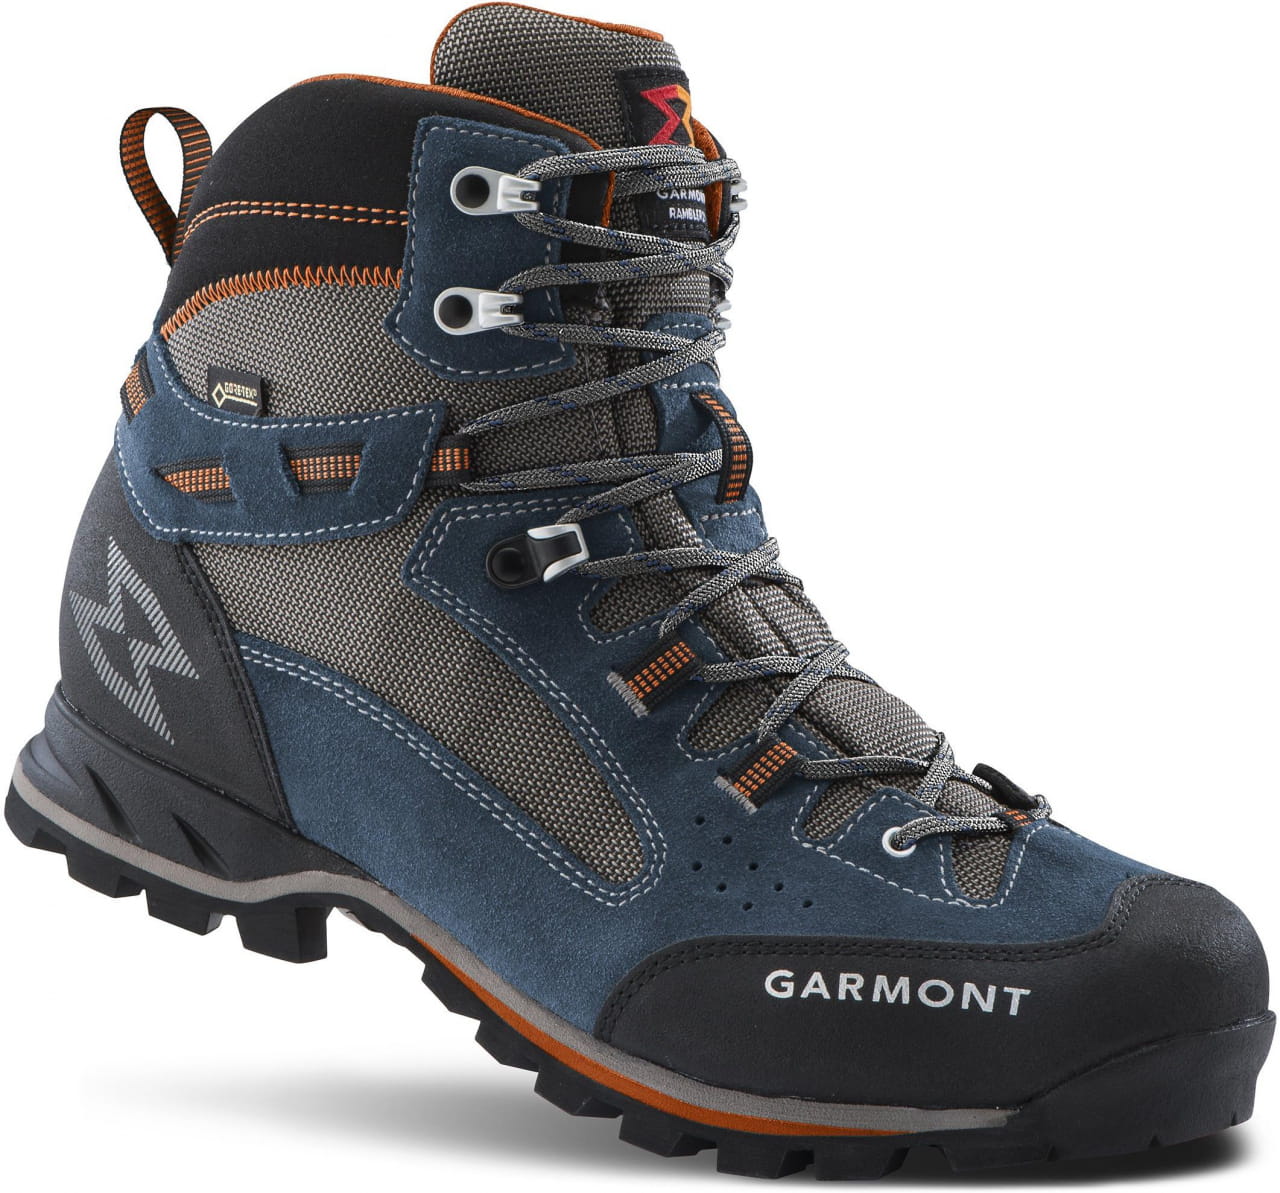 Outdoor-Schuhe für Männer Garmont Rambler 2.0 Gtx